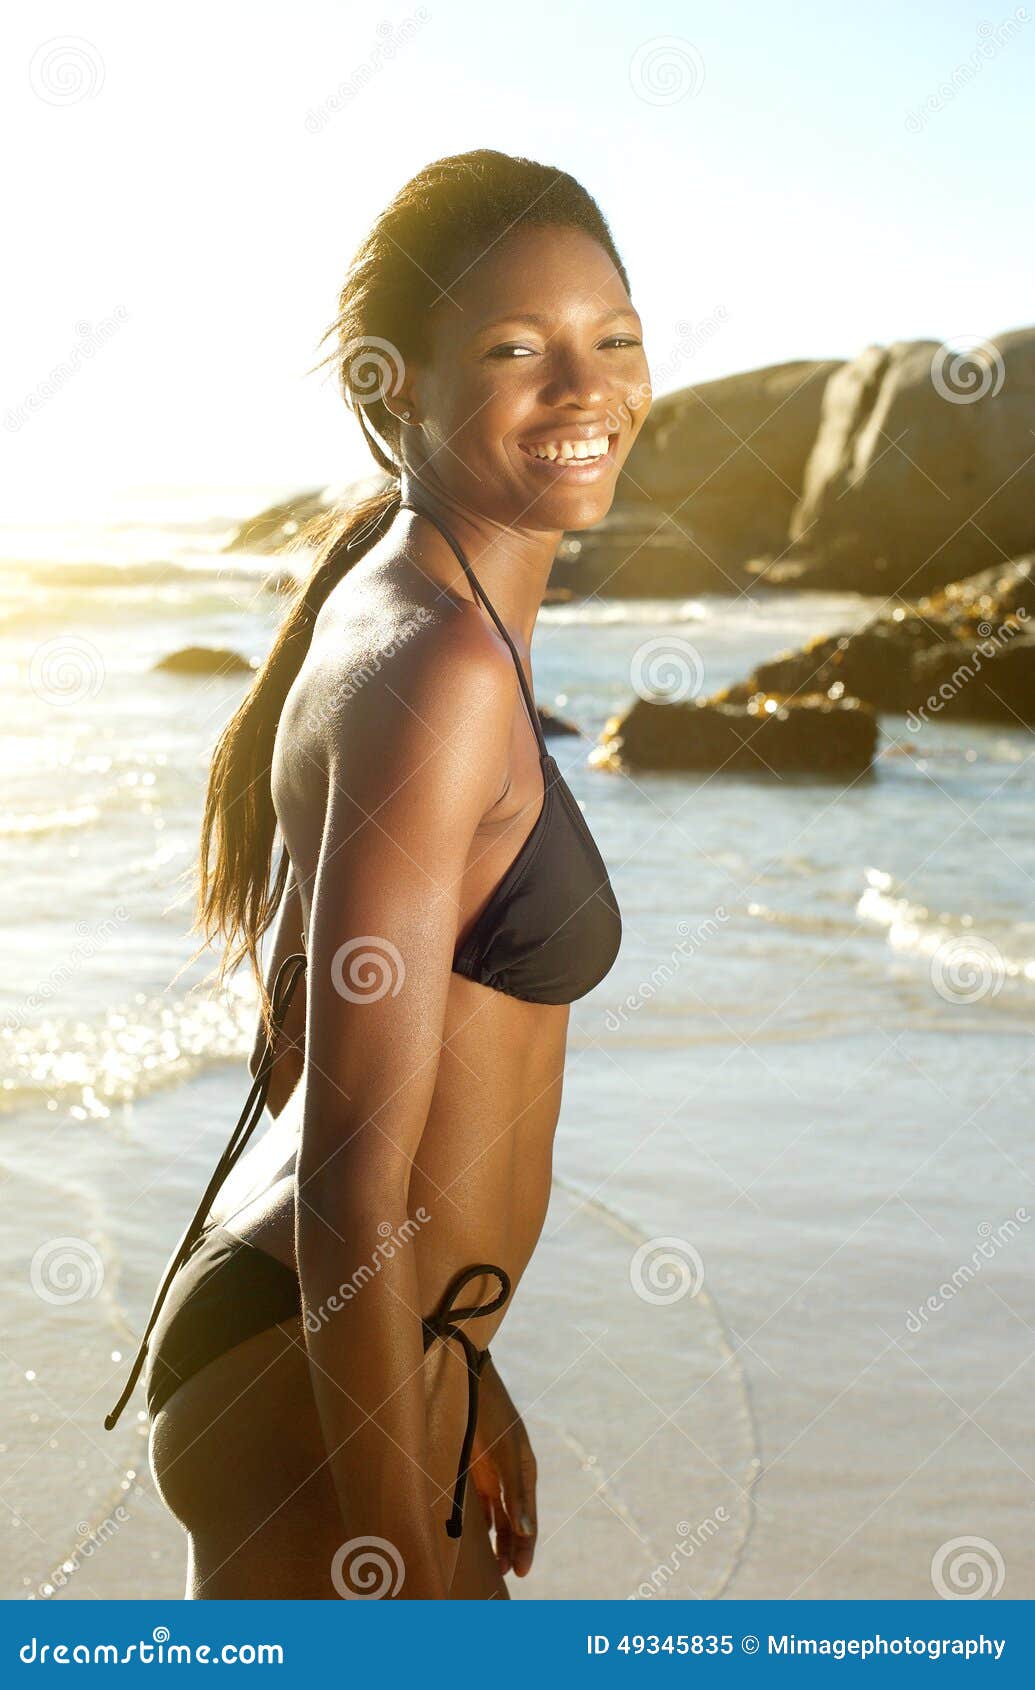 Black women in bikinis at beach 1 644 African American Woman Bikini Beach Photos Free Royalty Free Stock Photos From Dreamstime